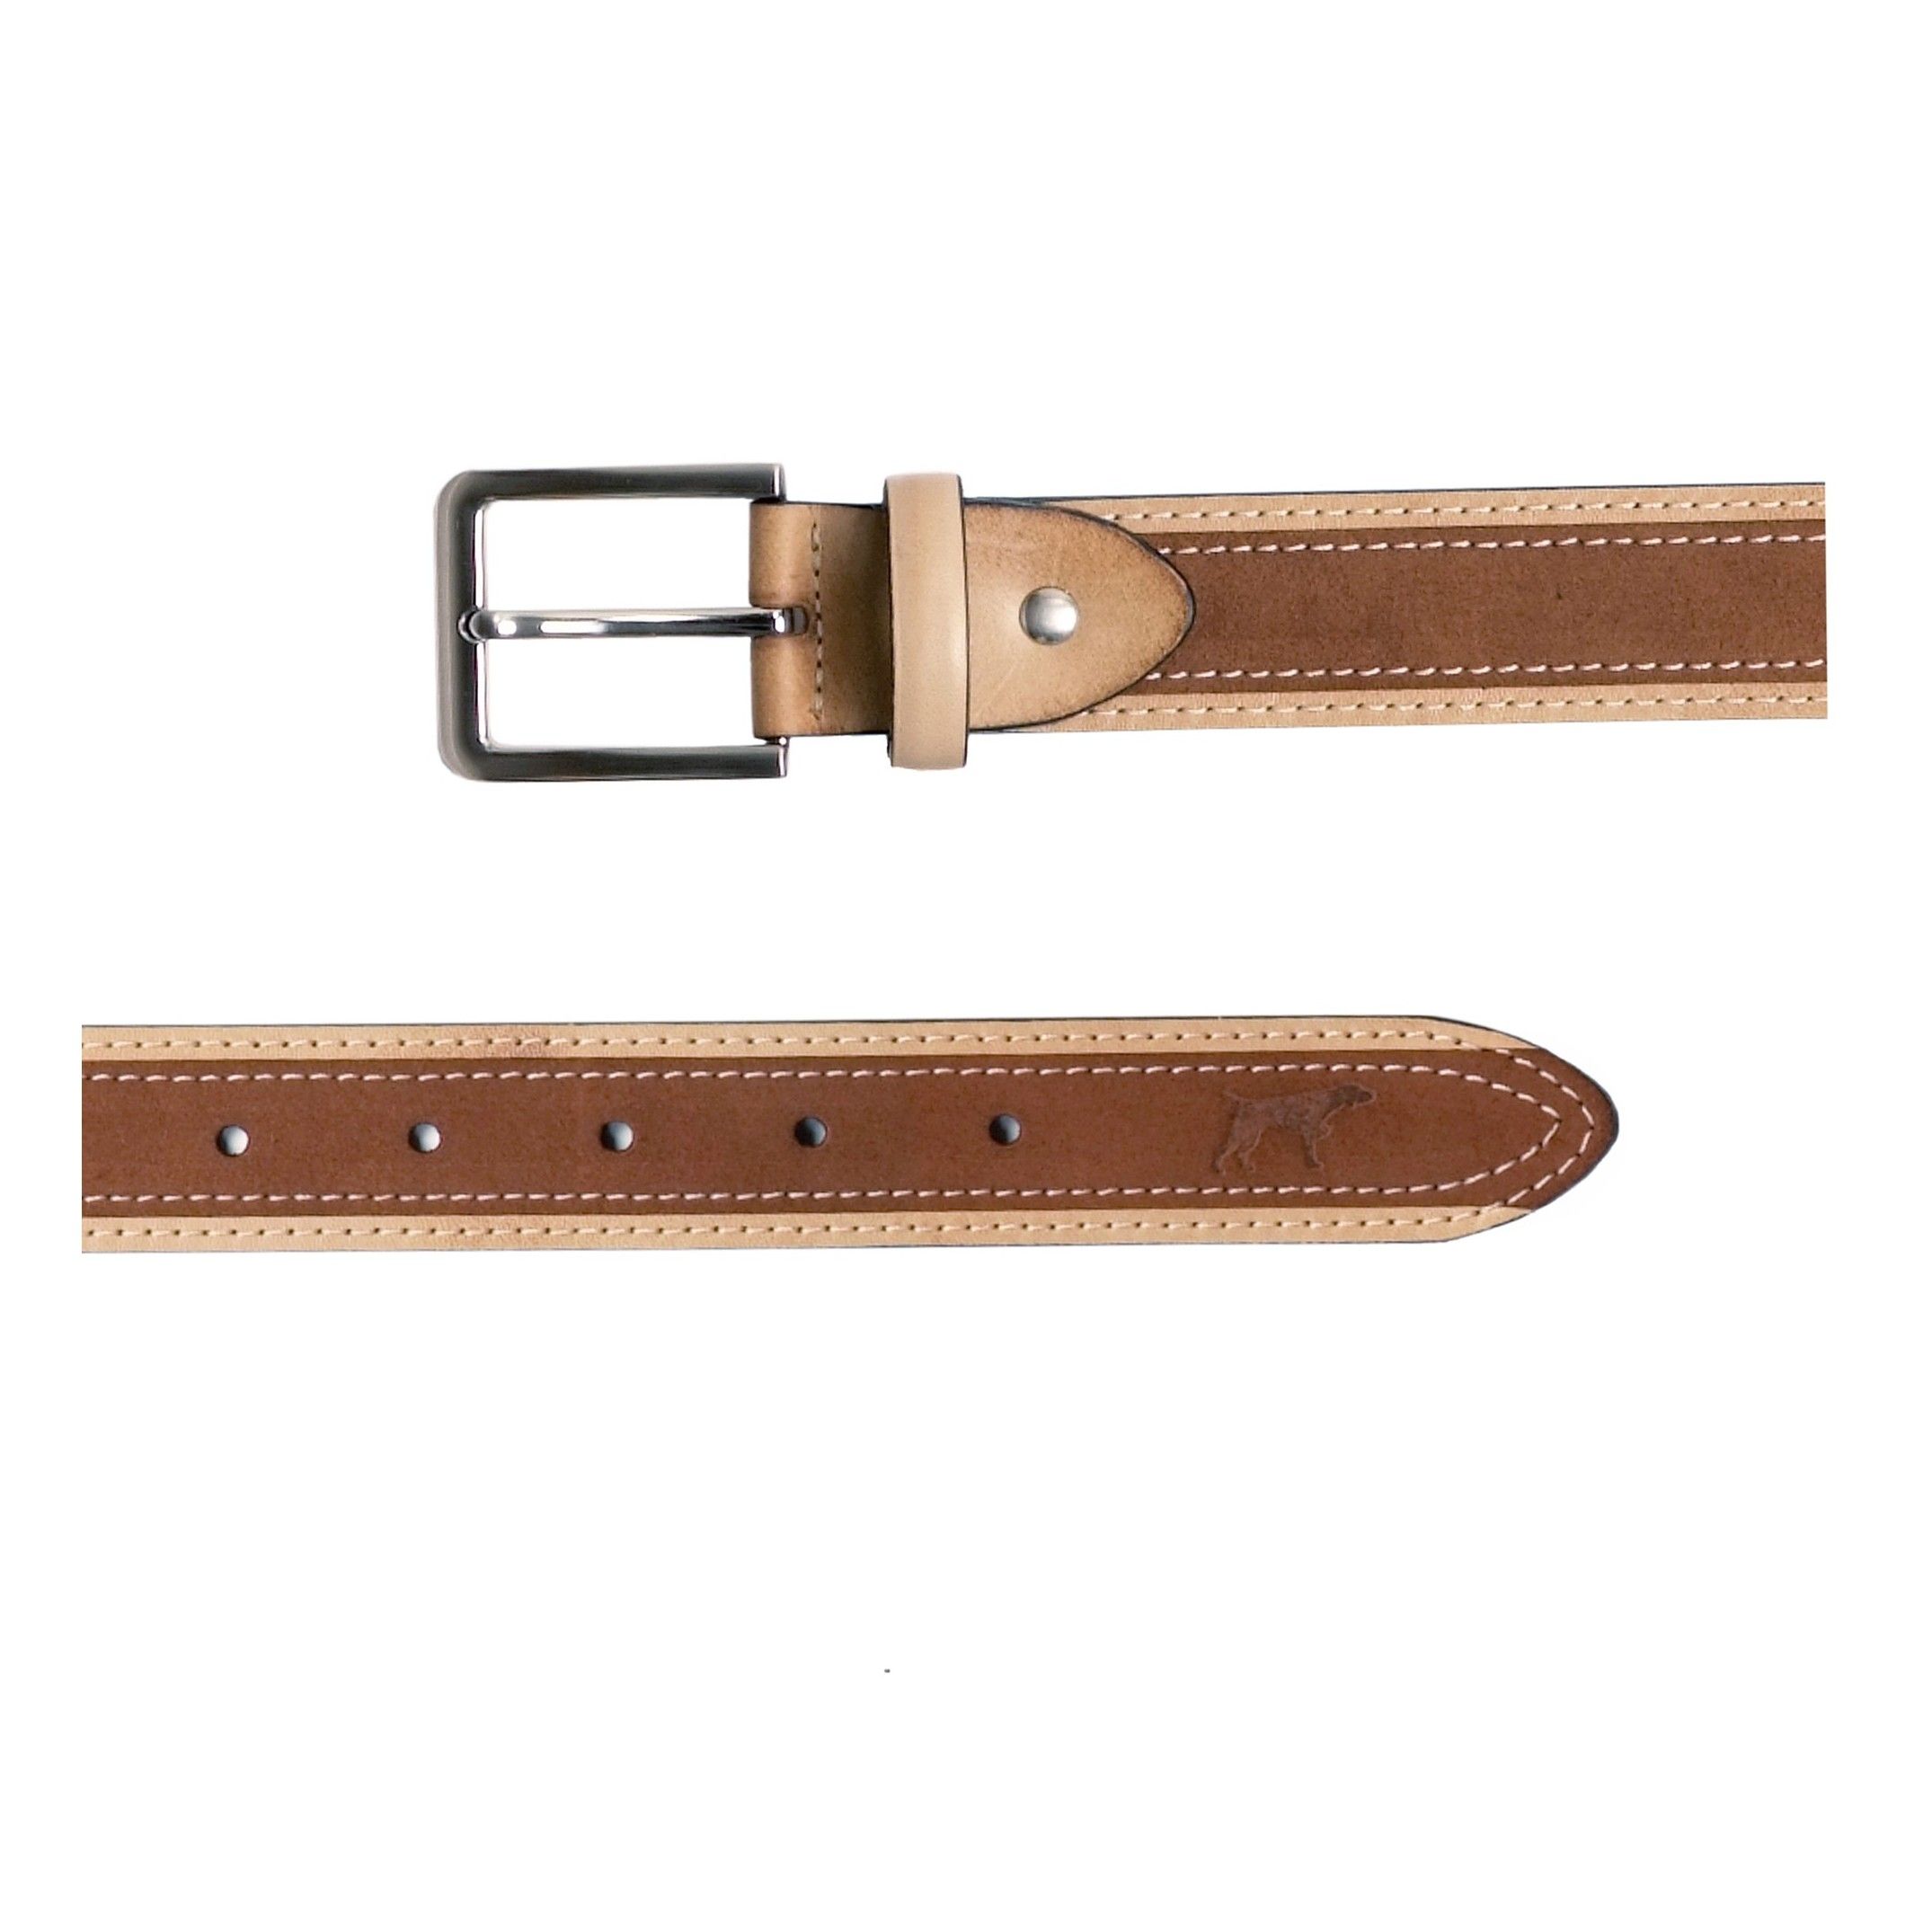 Castellanisimos Leather and Adjustable Belt for Men